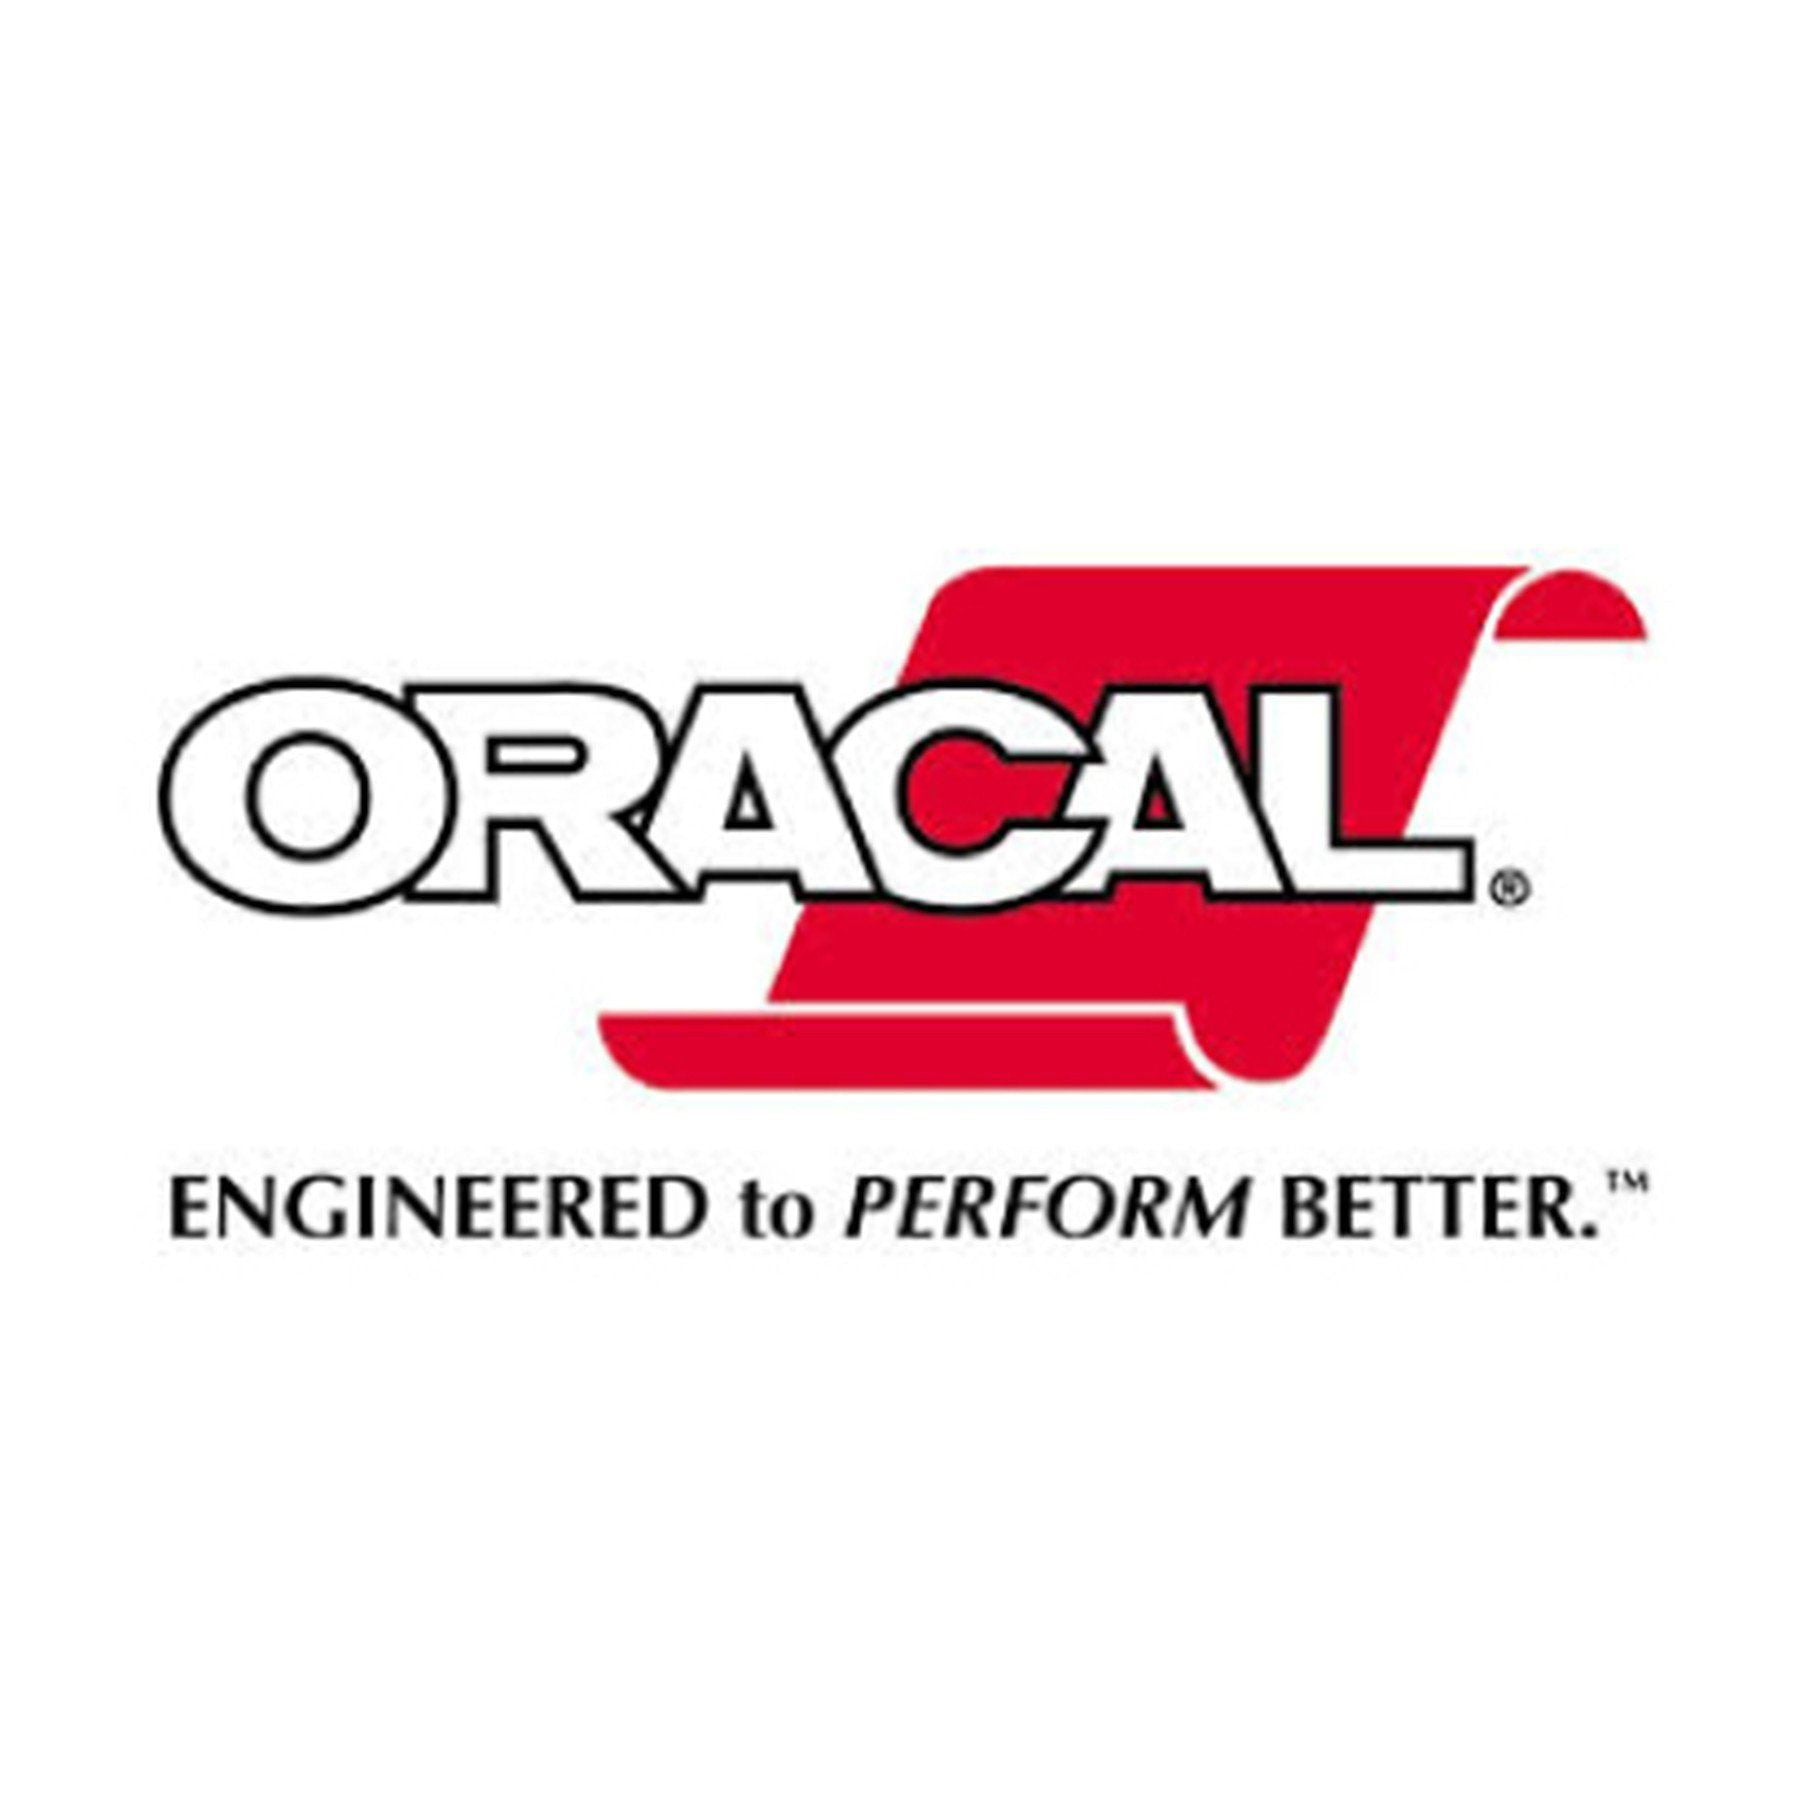 Oracal 651 Vinyl Sheets- 24 Pack – Premier Home Essentials, INC